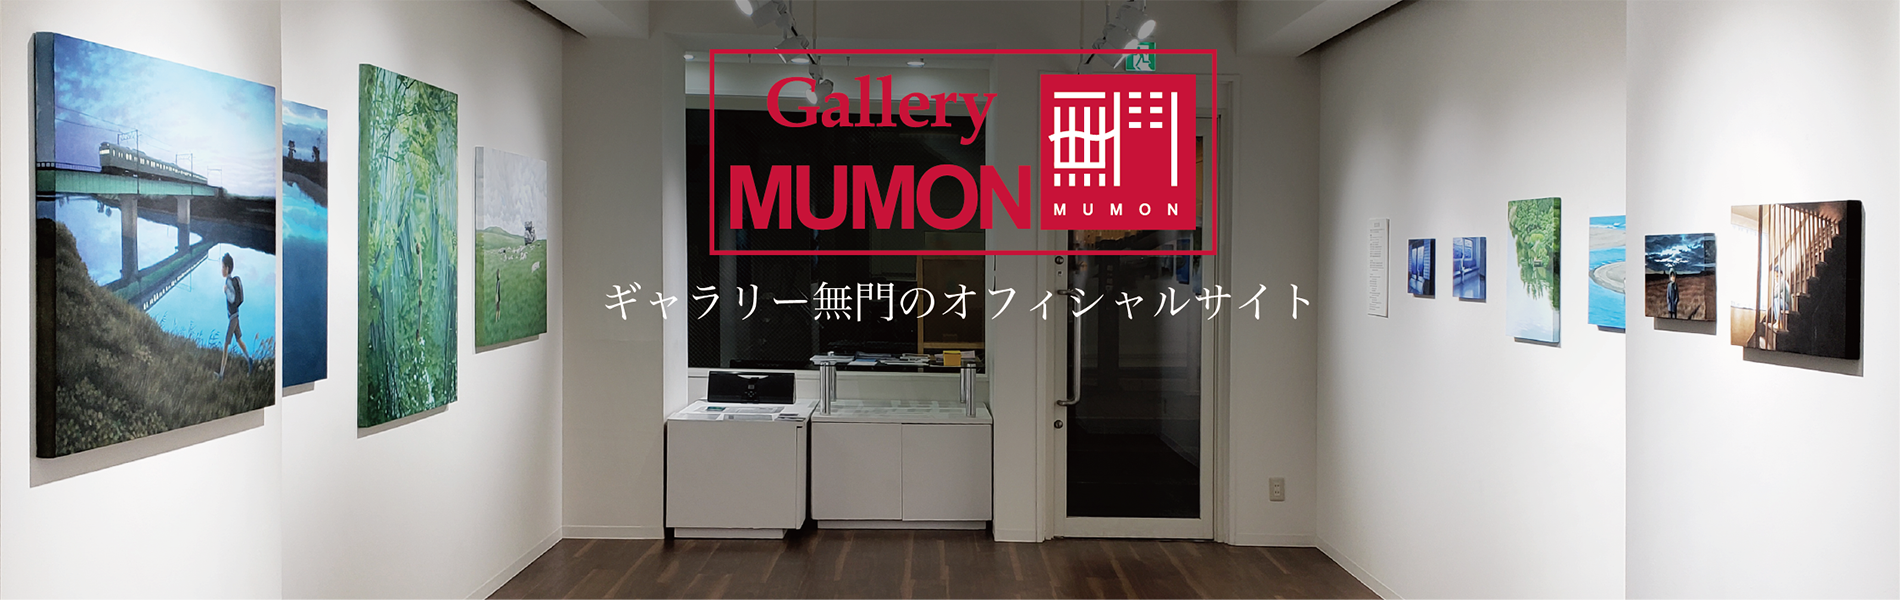 Gallery MUMON